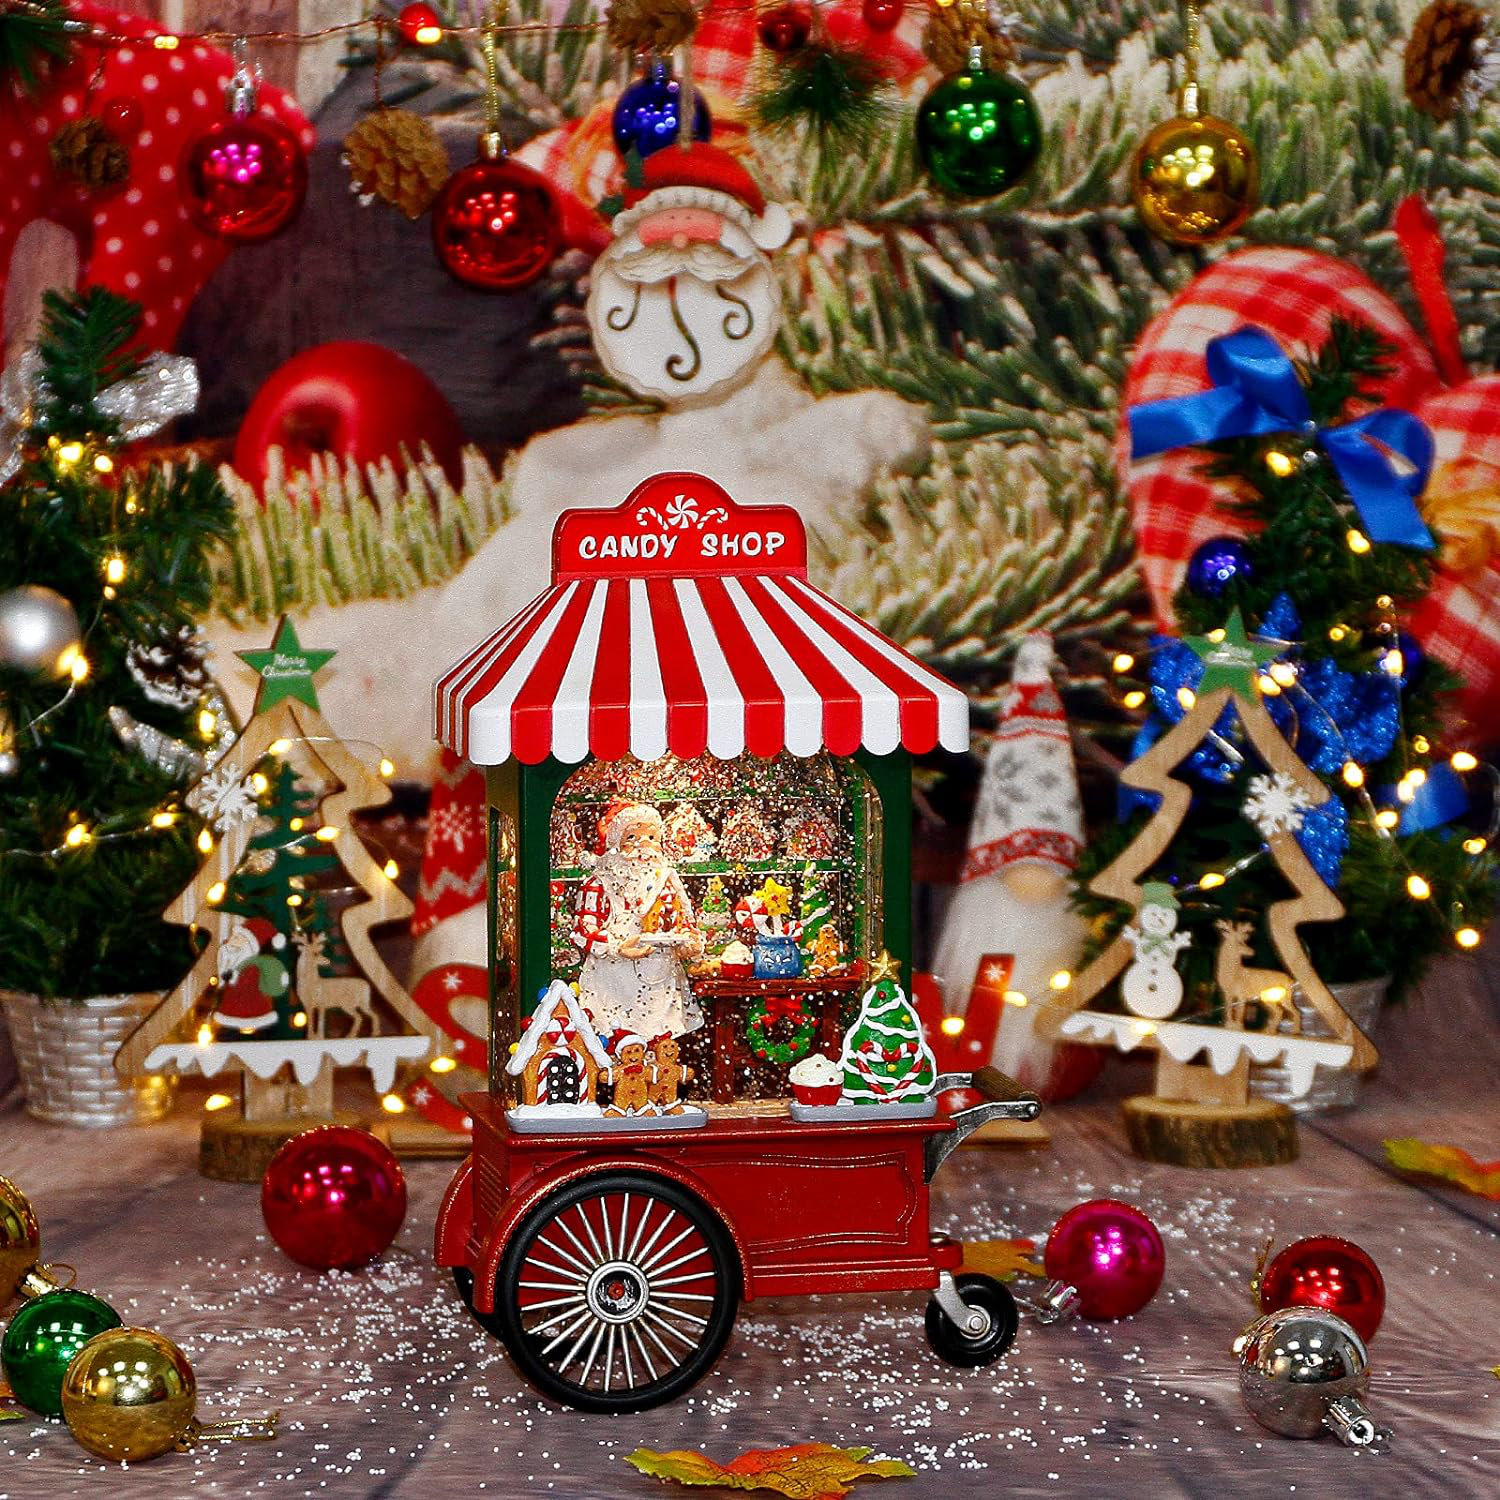 Starbucks Ornaments, Christmas Ornaments, Faux Whipped Cream Cup Ornaments,  Christmas Decor, Christmas Gift 